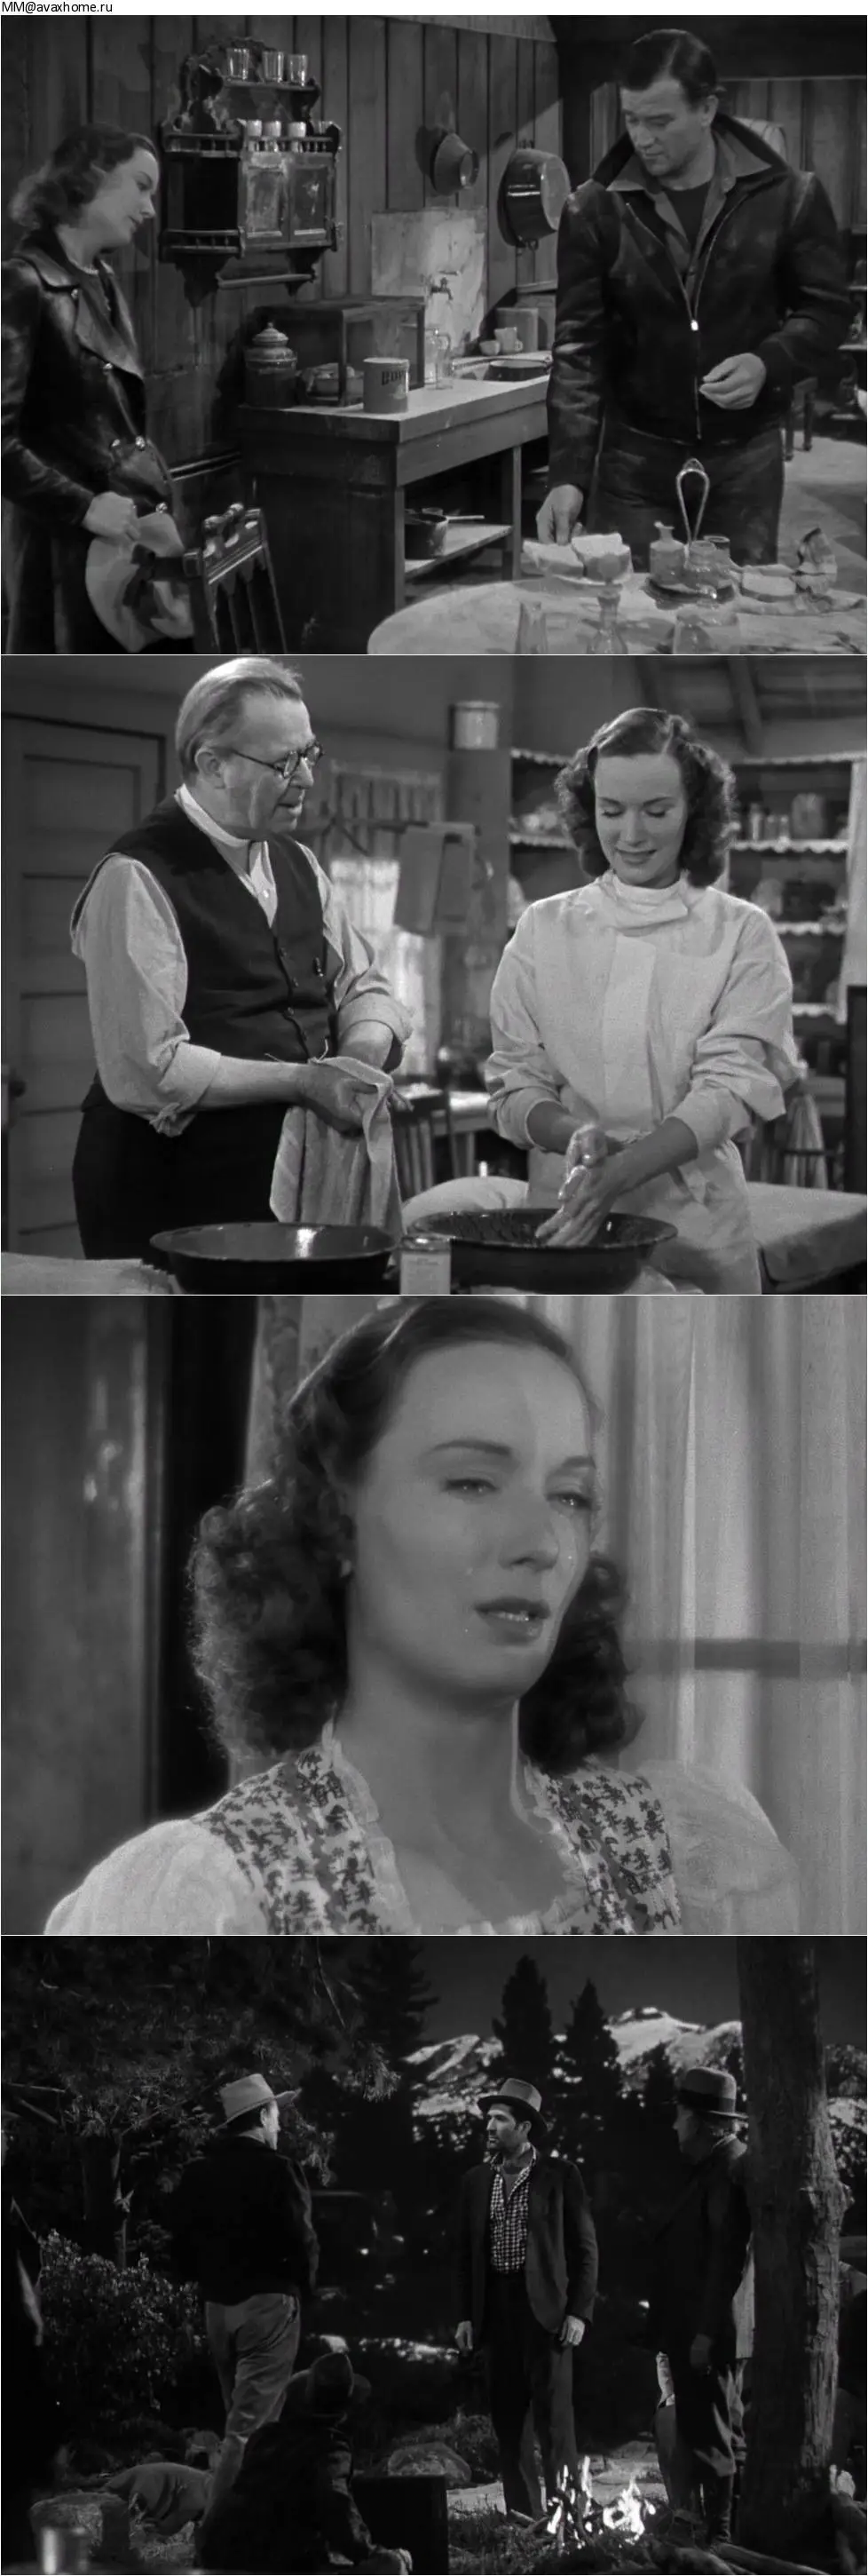 Three Faces West (1940)